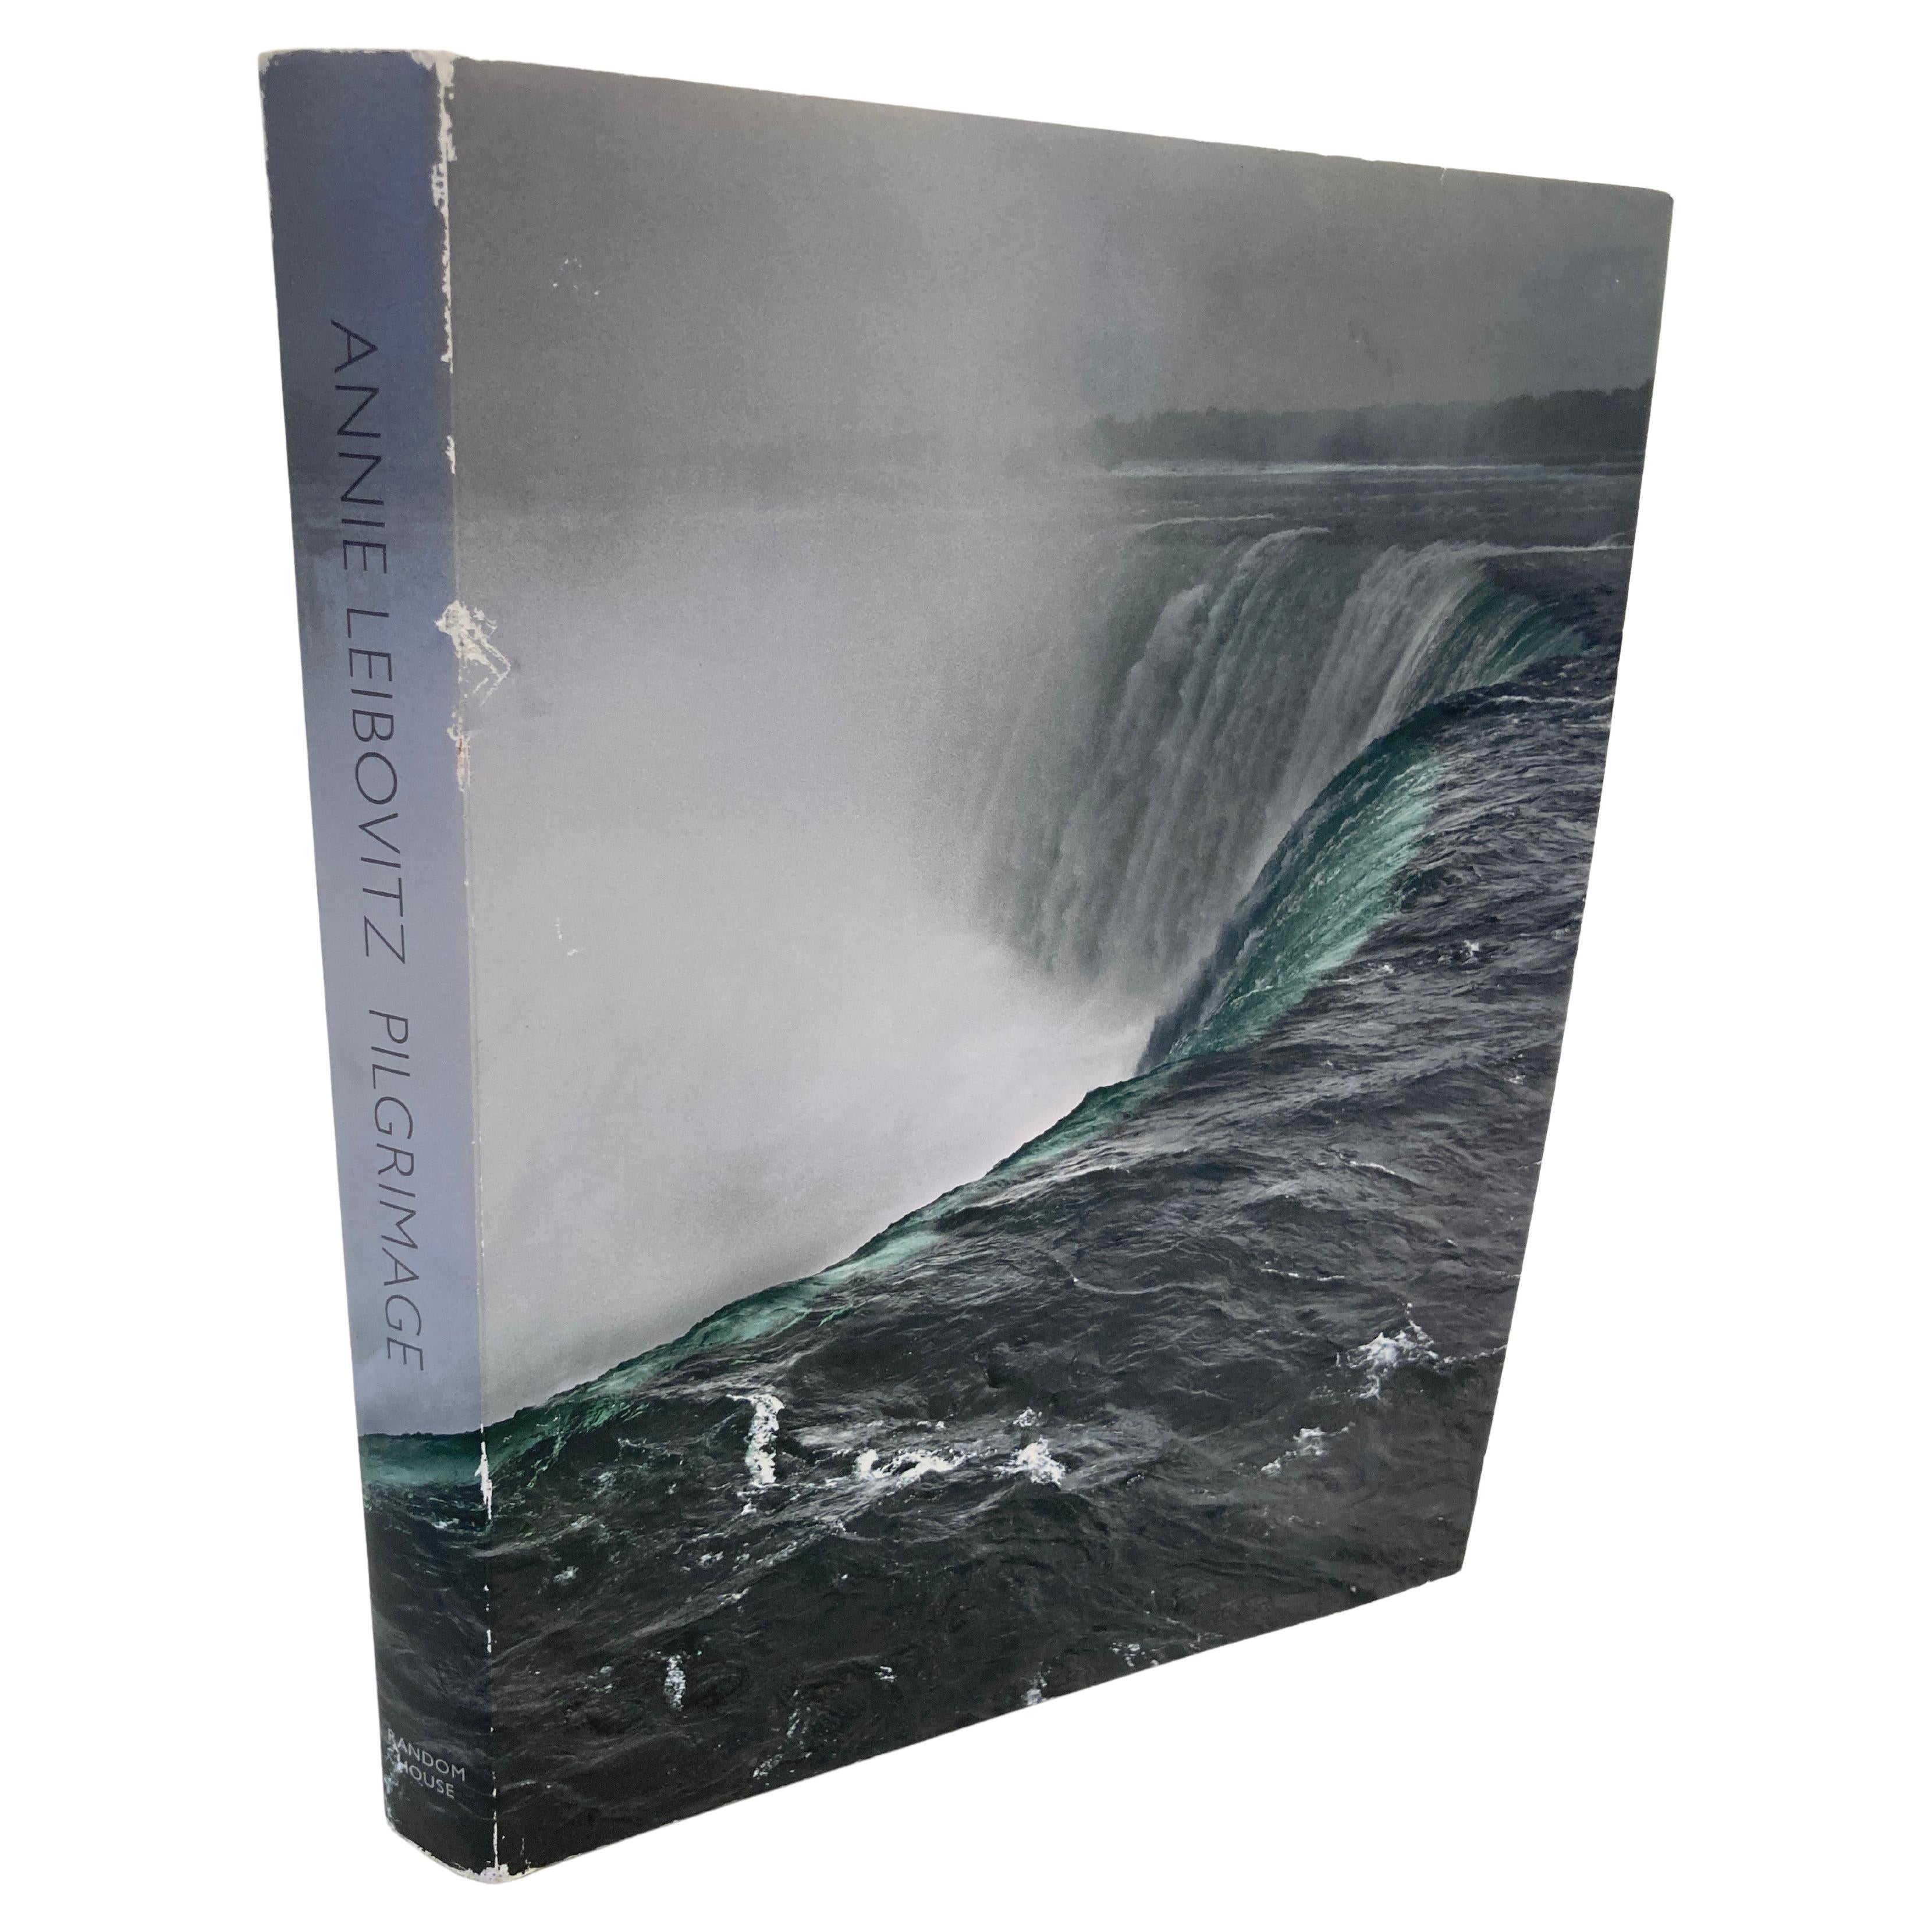 Pilgrimage by Annie Leibovitz Hardcover Book 2011